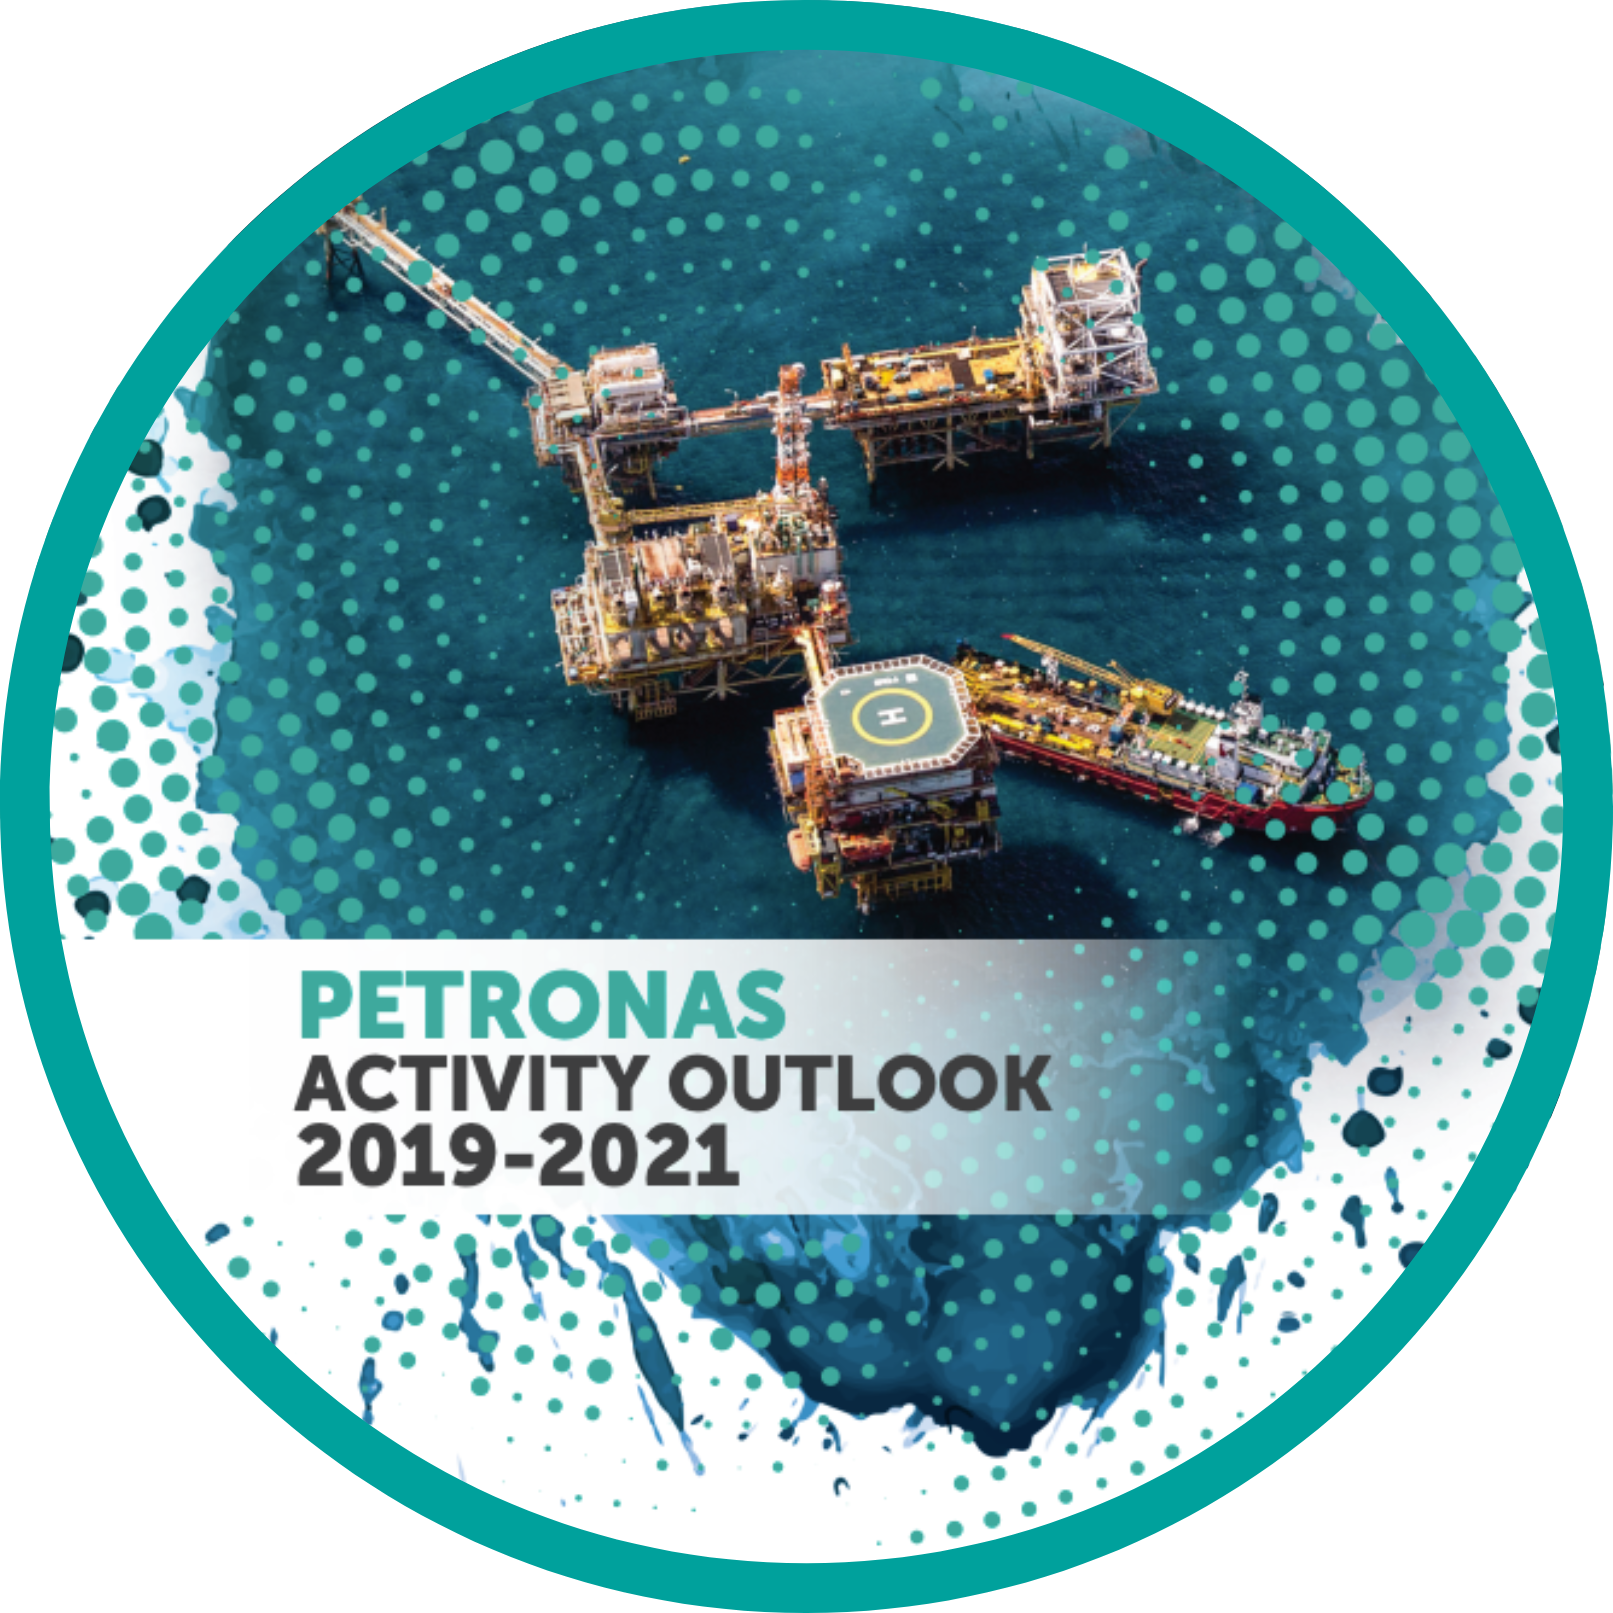 "PETRONAS Activity Outlook 2019-2021"